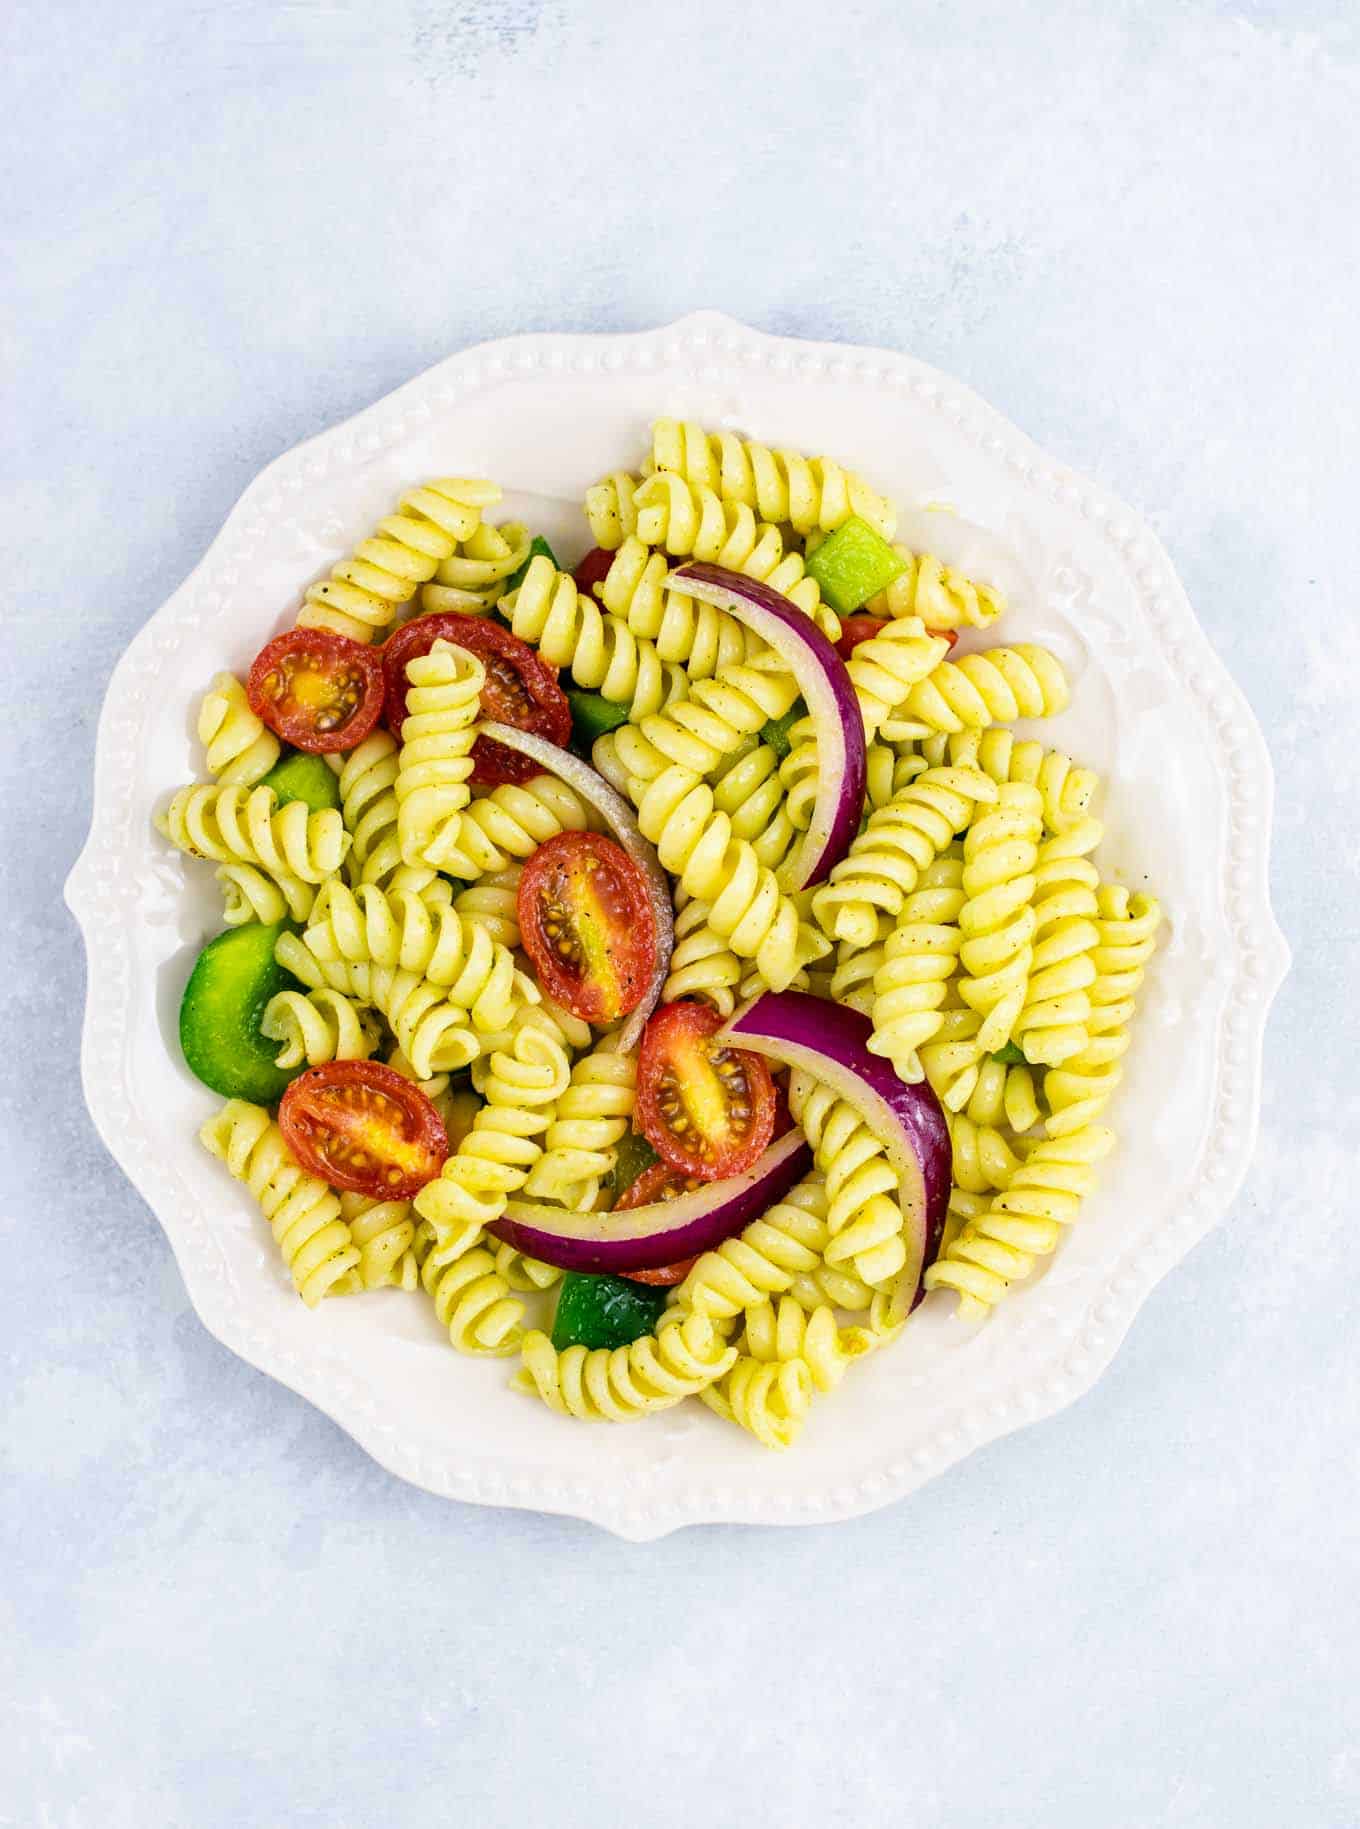 best vegan recipes - Vegan cold pasta salad recipe – this was AMAZING! So much flavor and really easy to make. #vegan #pastasalad #vegetarian #sidedish #summer #meatless #dairyfree #healthyrecipe #veganpastasalad